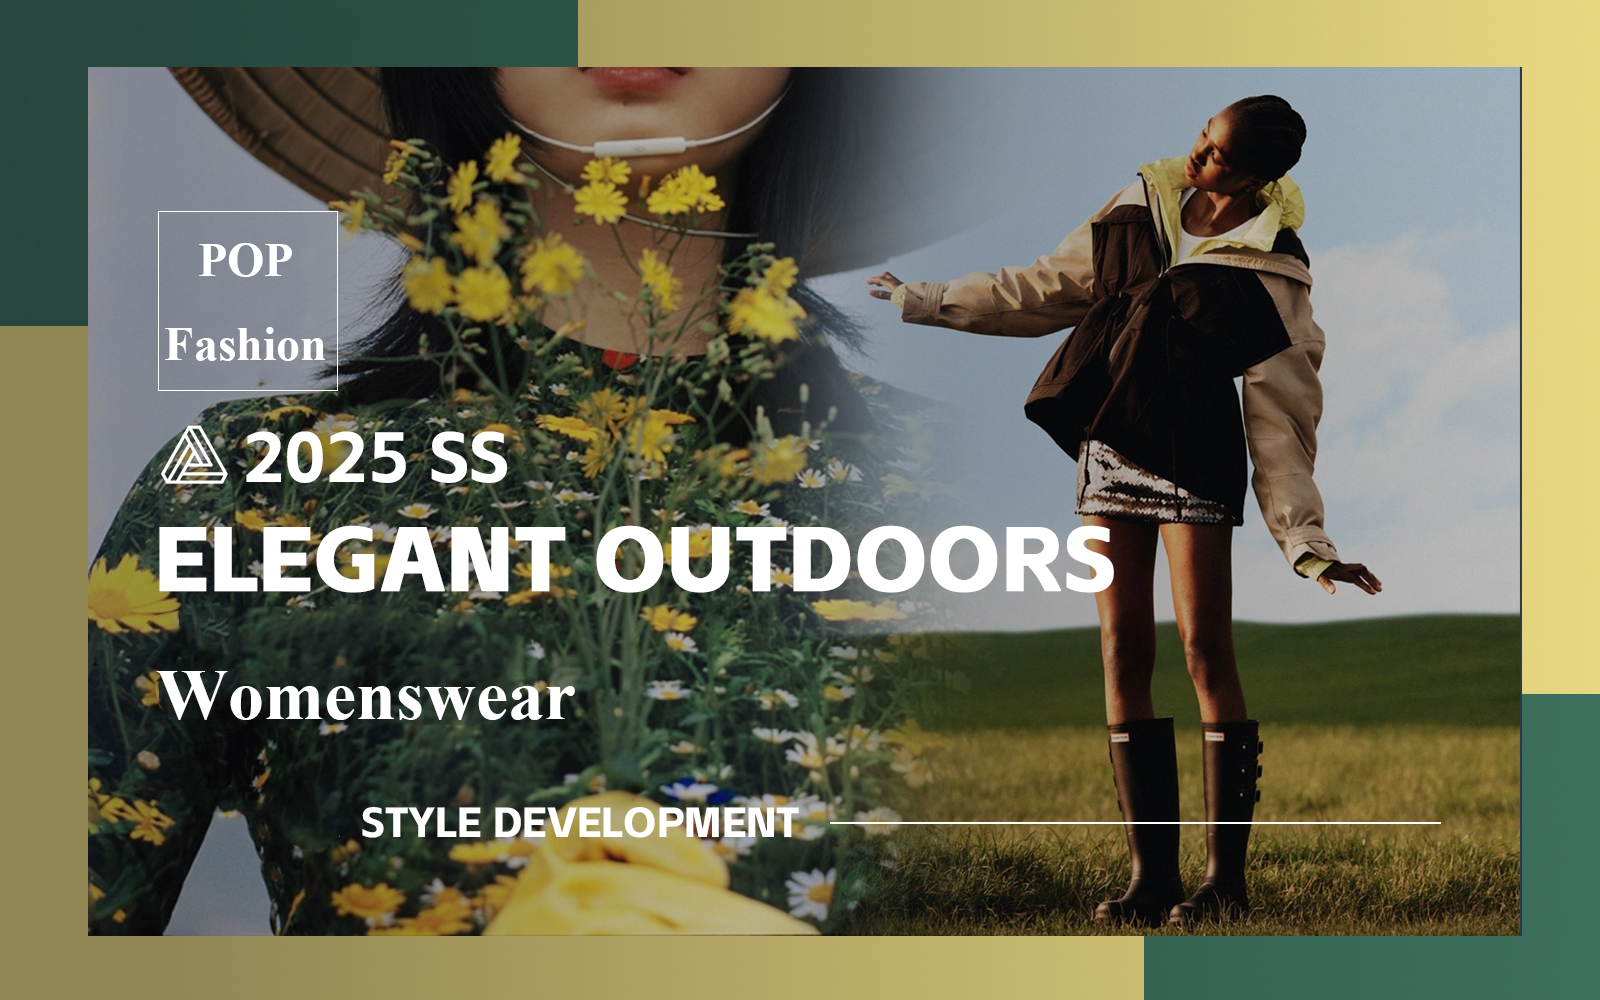 Elegant Outdoor -- The Design Development of Womenswear